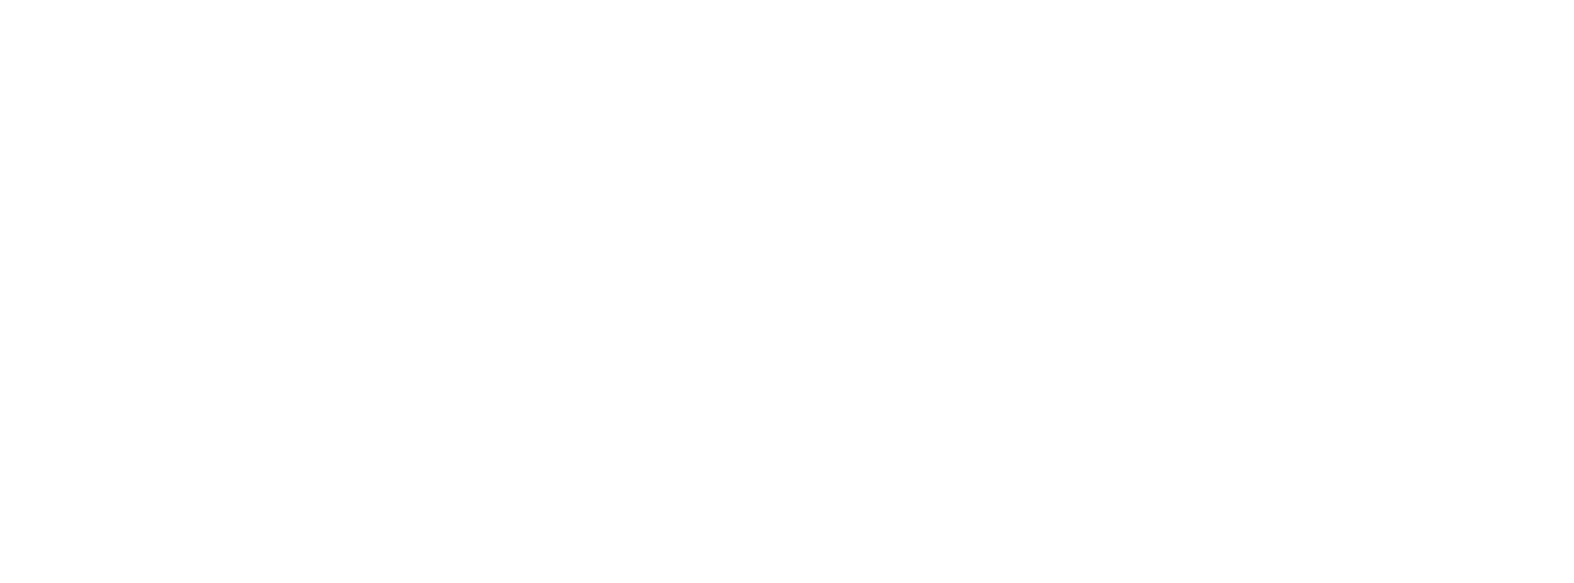 AGCO logo large for dark backgrounds (transparent PNG)